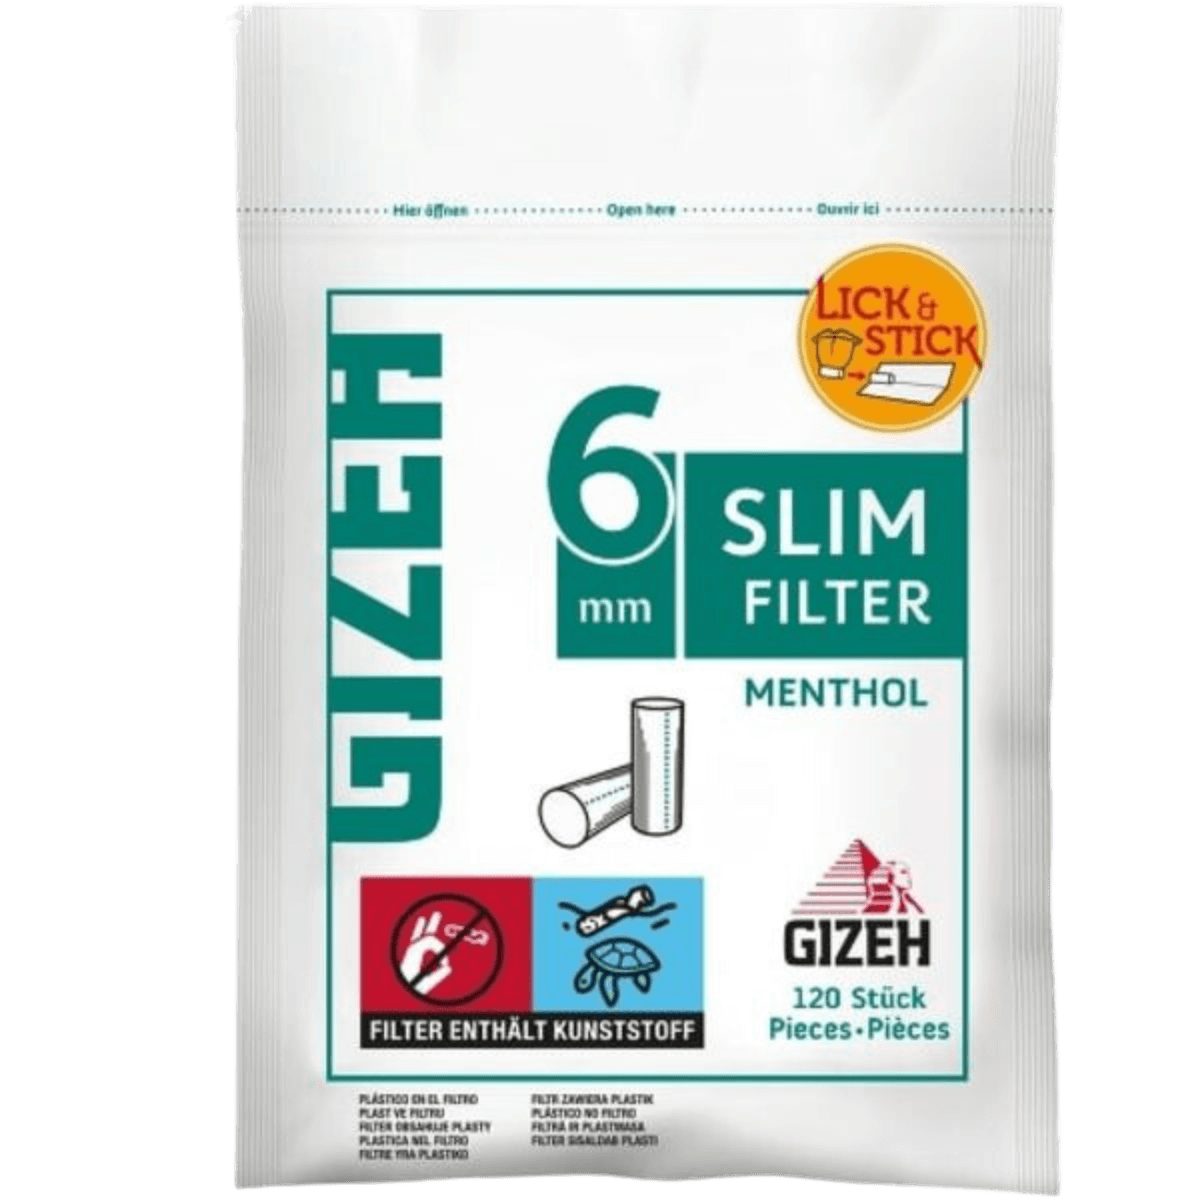 GIZEH Slim Filter Menthol 6mm 120 Stück für 1,60 €